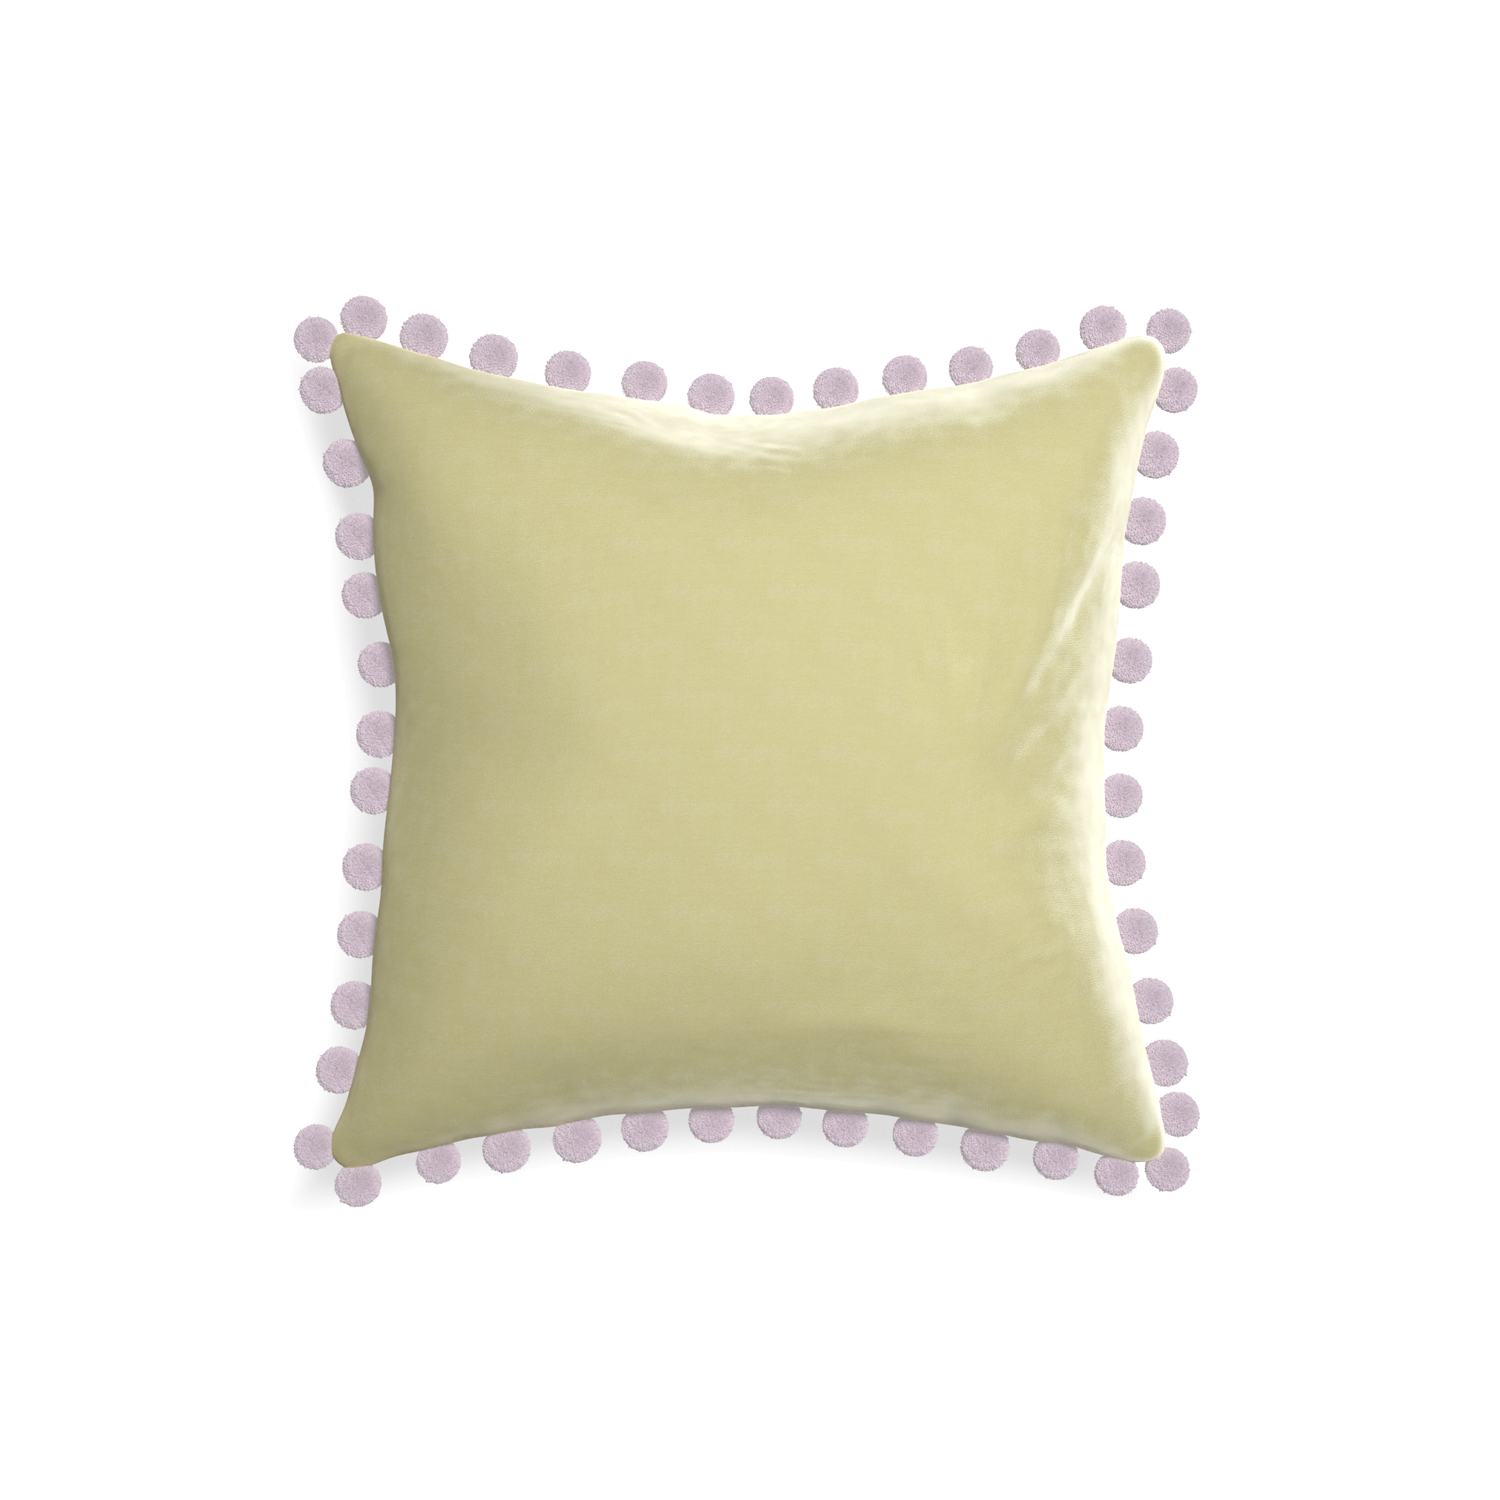 square light green pillow with lilac pom poms